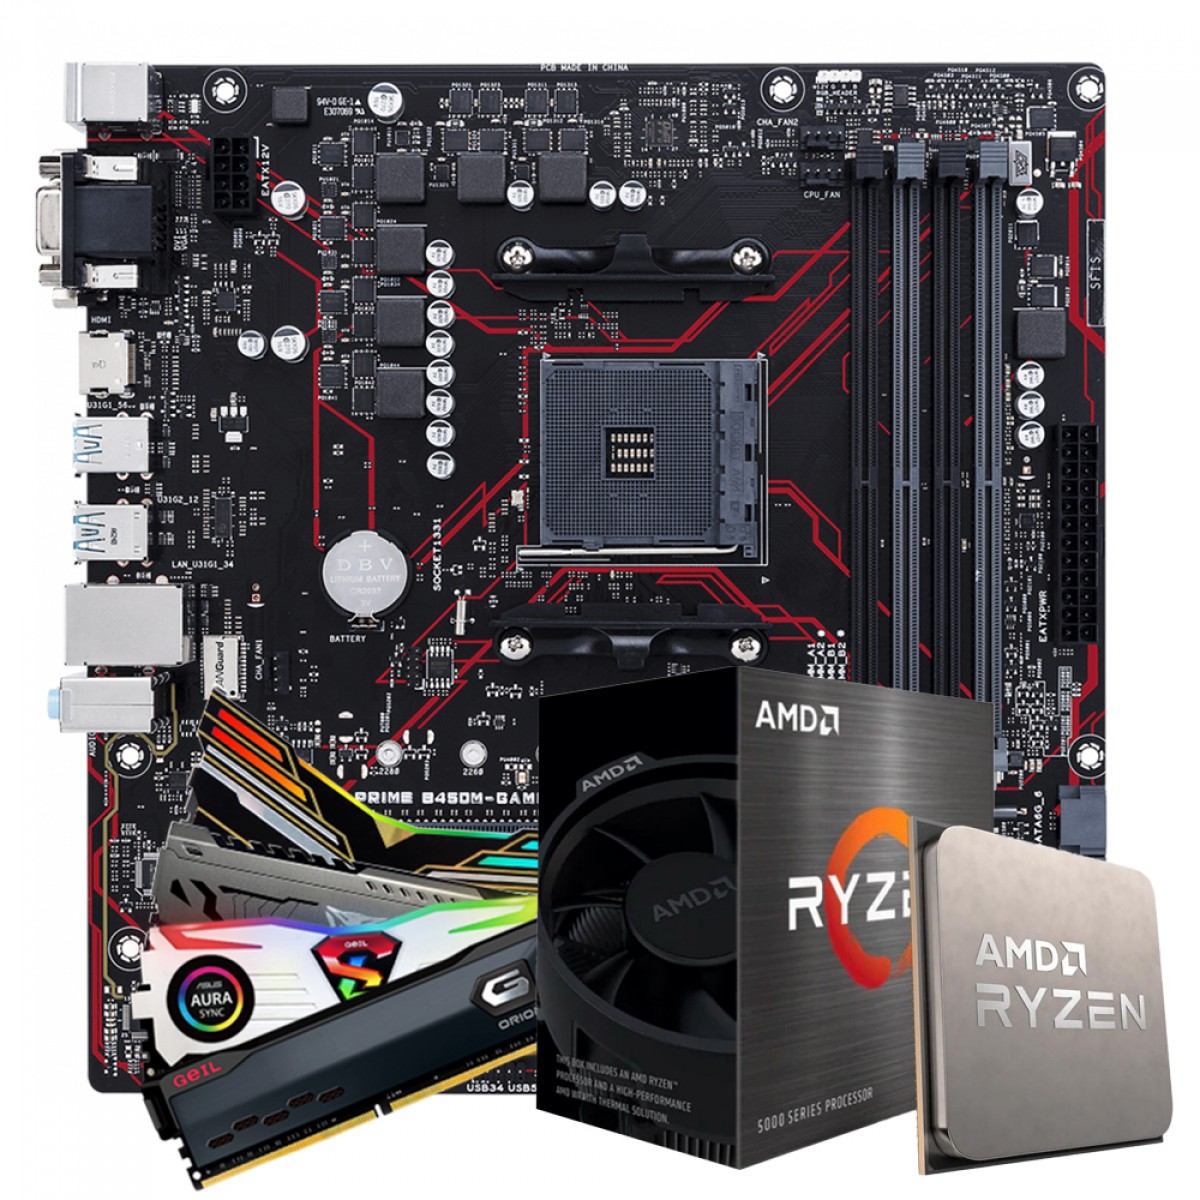 Kit Upgrade, Asus Prime B450M Gaming/BR + AMD Ryzen 7 5700G + 16GB (2x8GB) DDR4 RGB